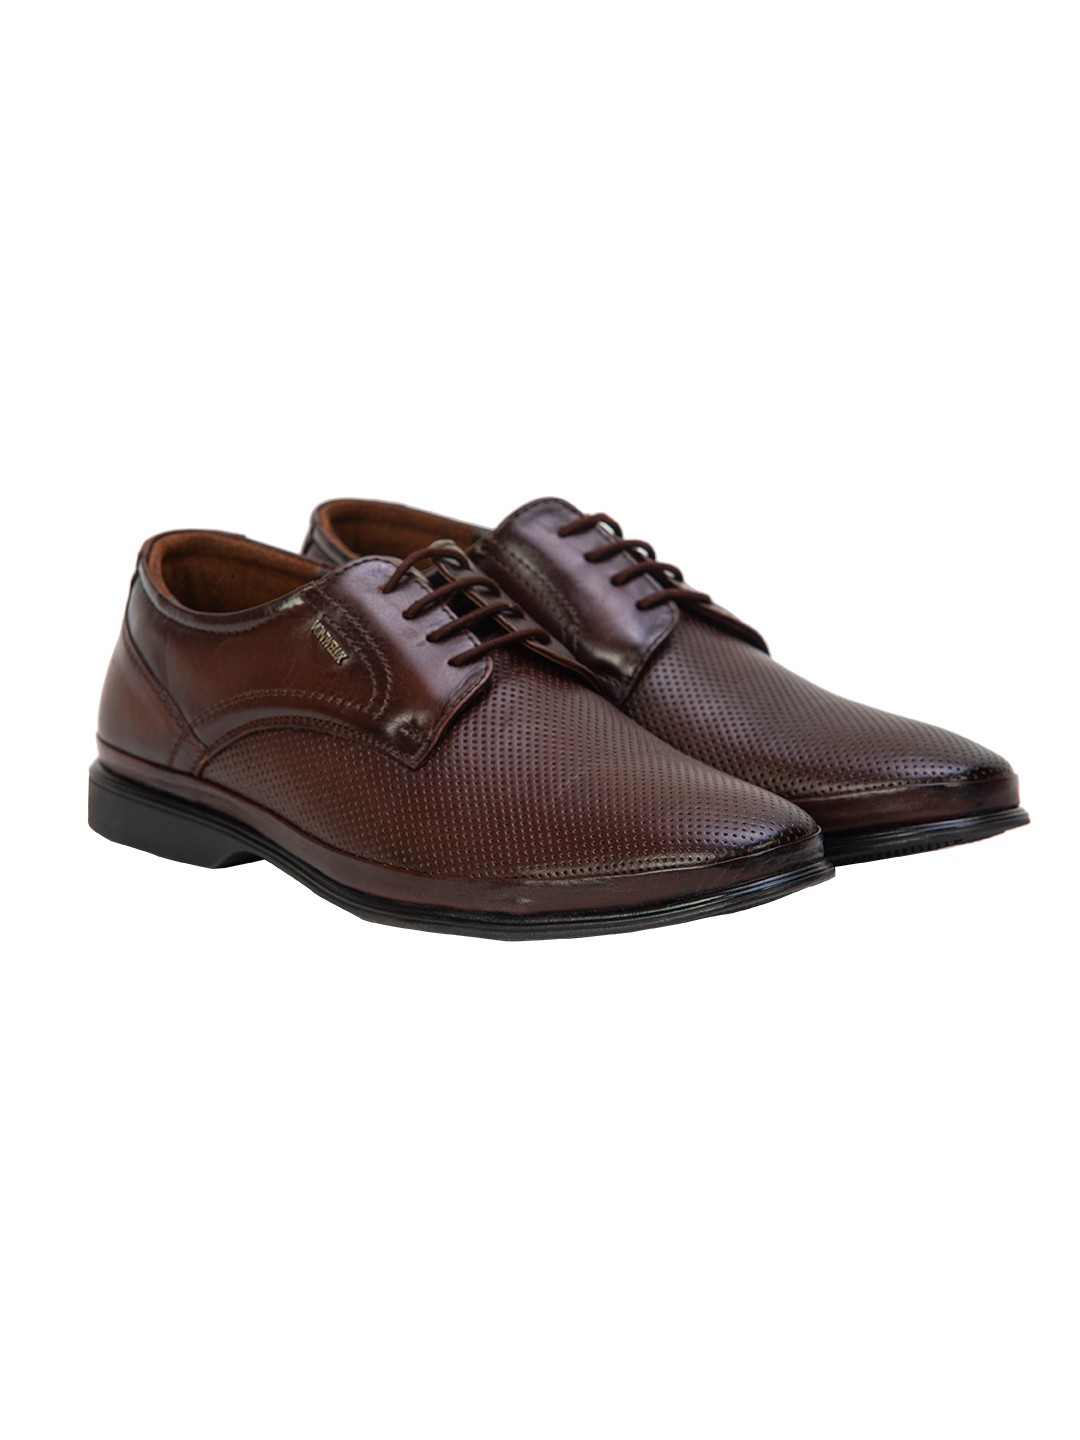 Buy Von Wellx Germany Comfort Coen Brown Shoes Online in Faridabad